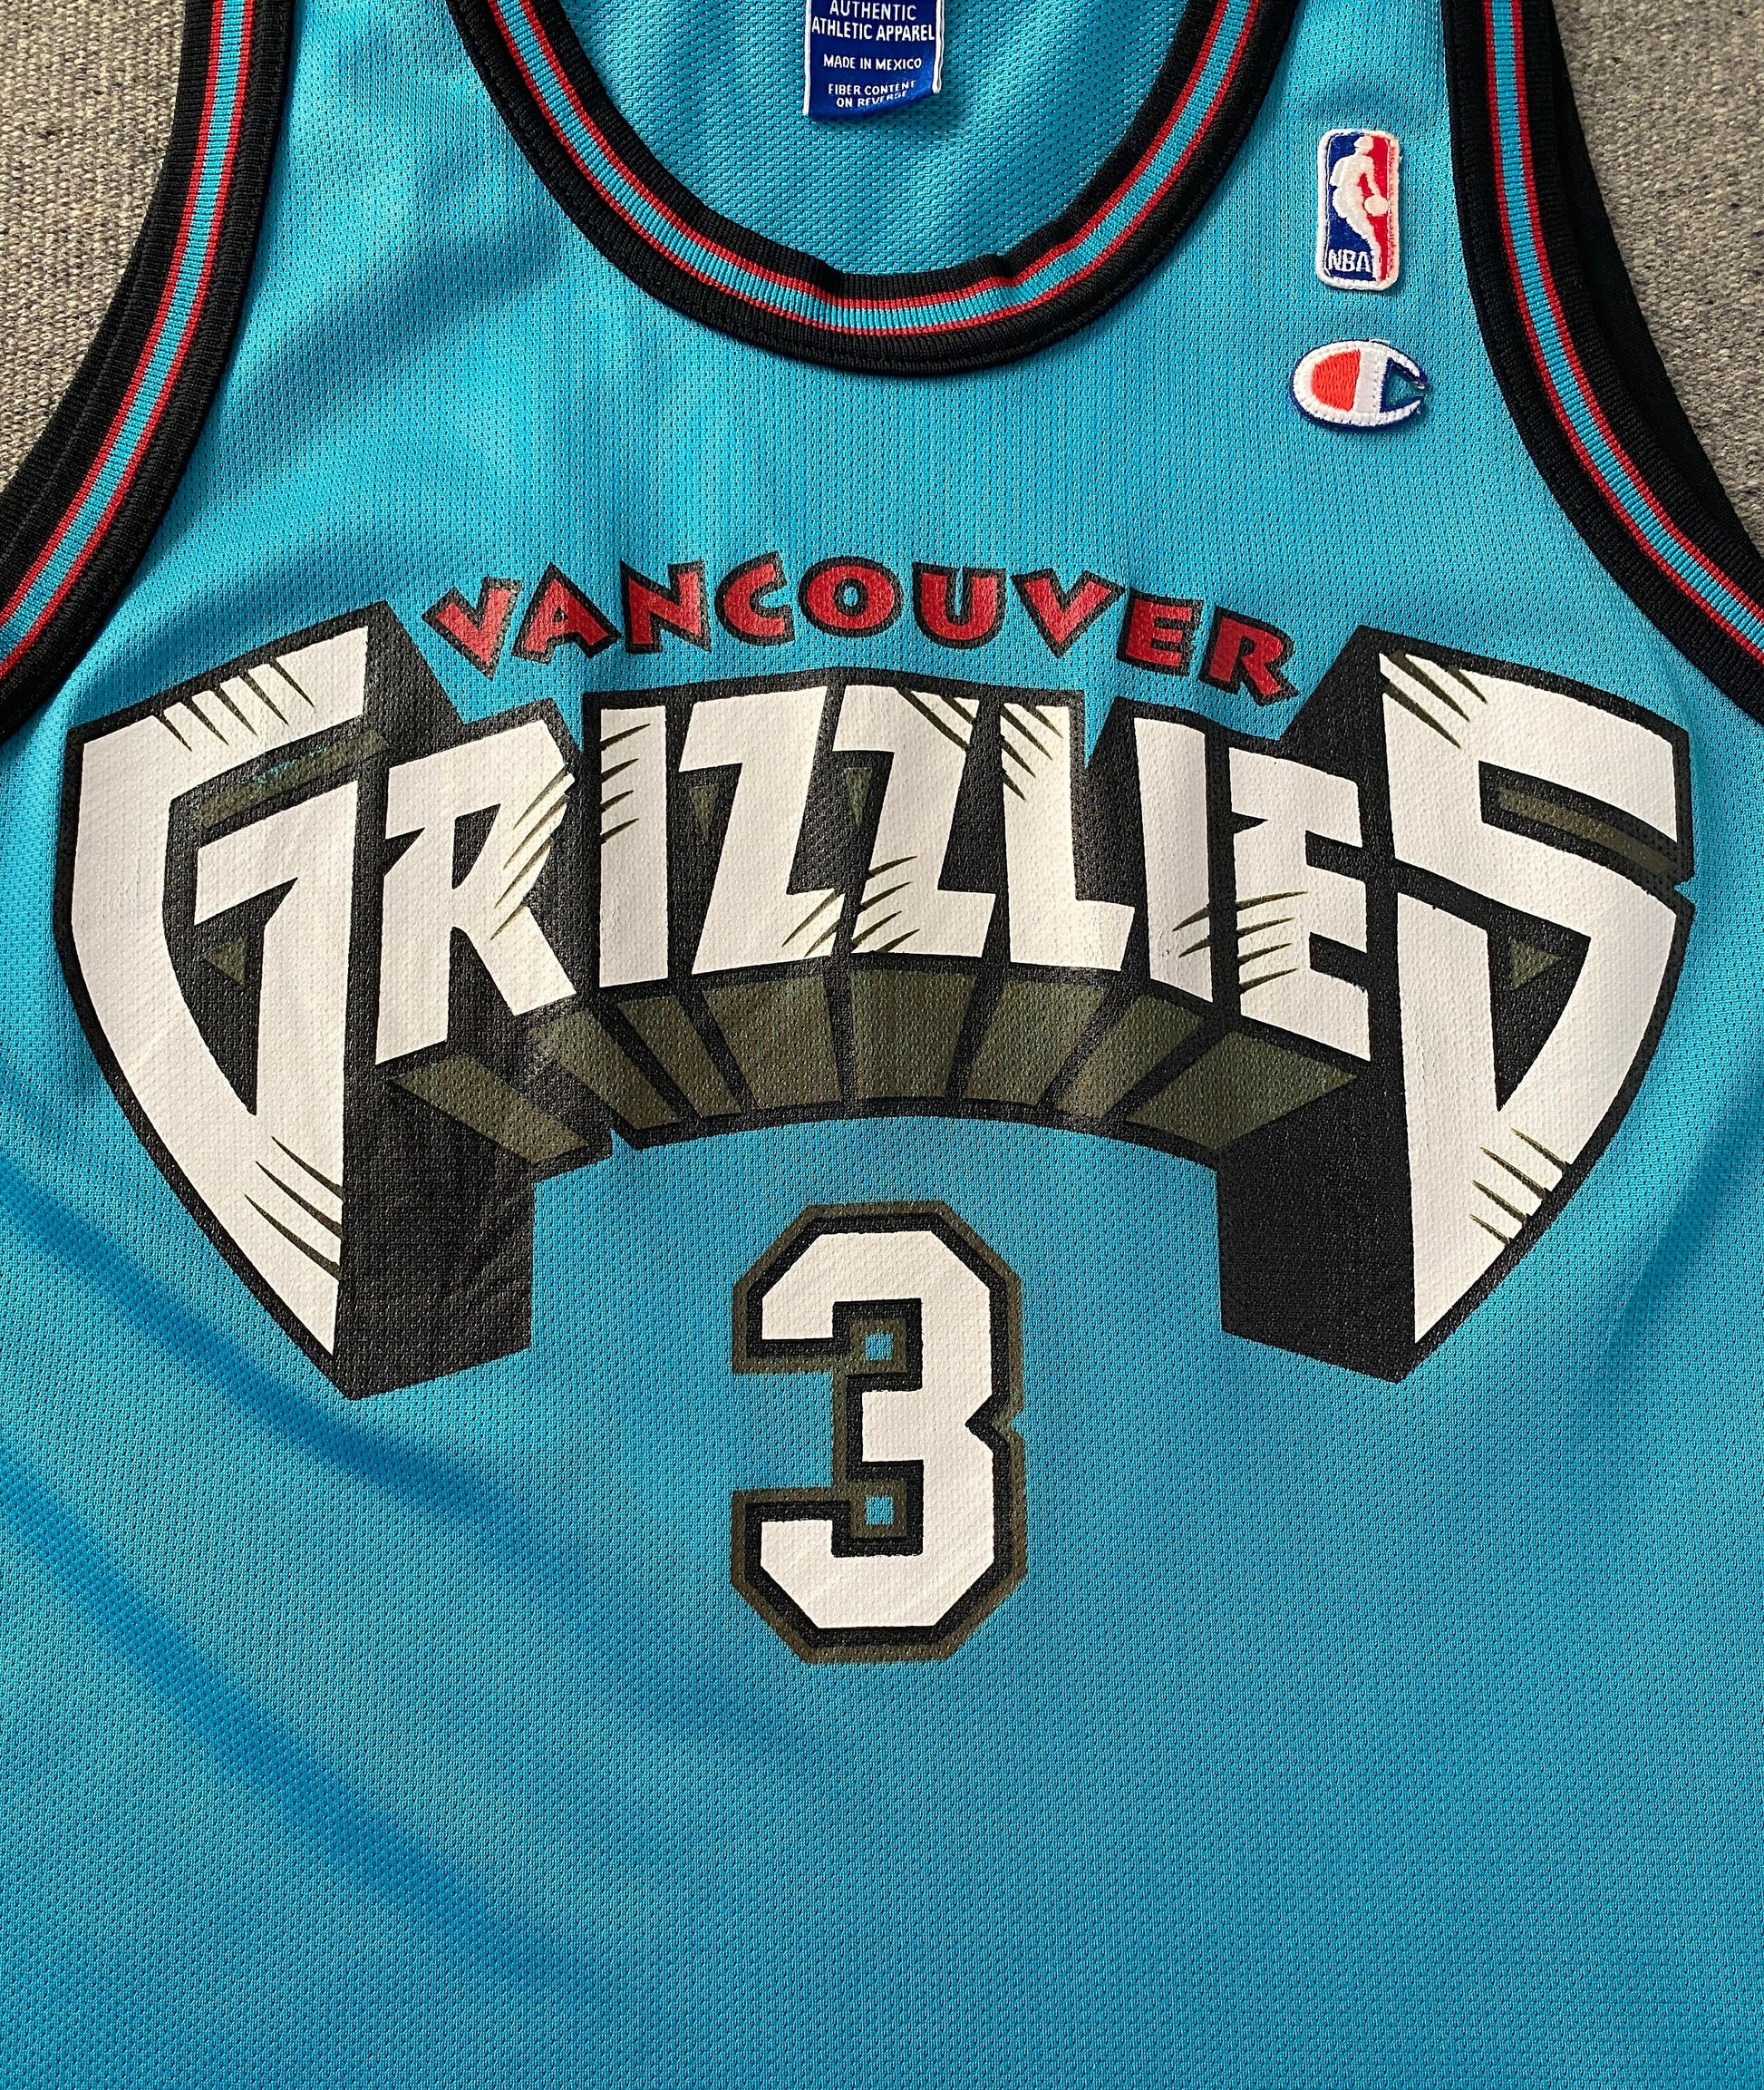 Vintage 90s NBA Grizzlies Abdur-Rahim #3 Champion jersey, size 44 - front view.